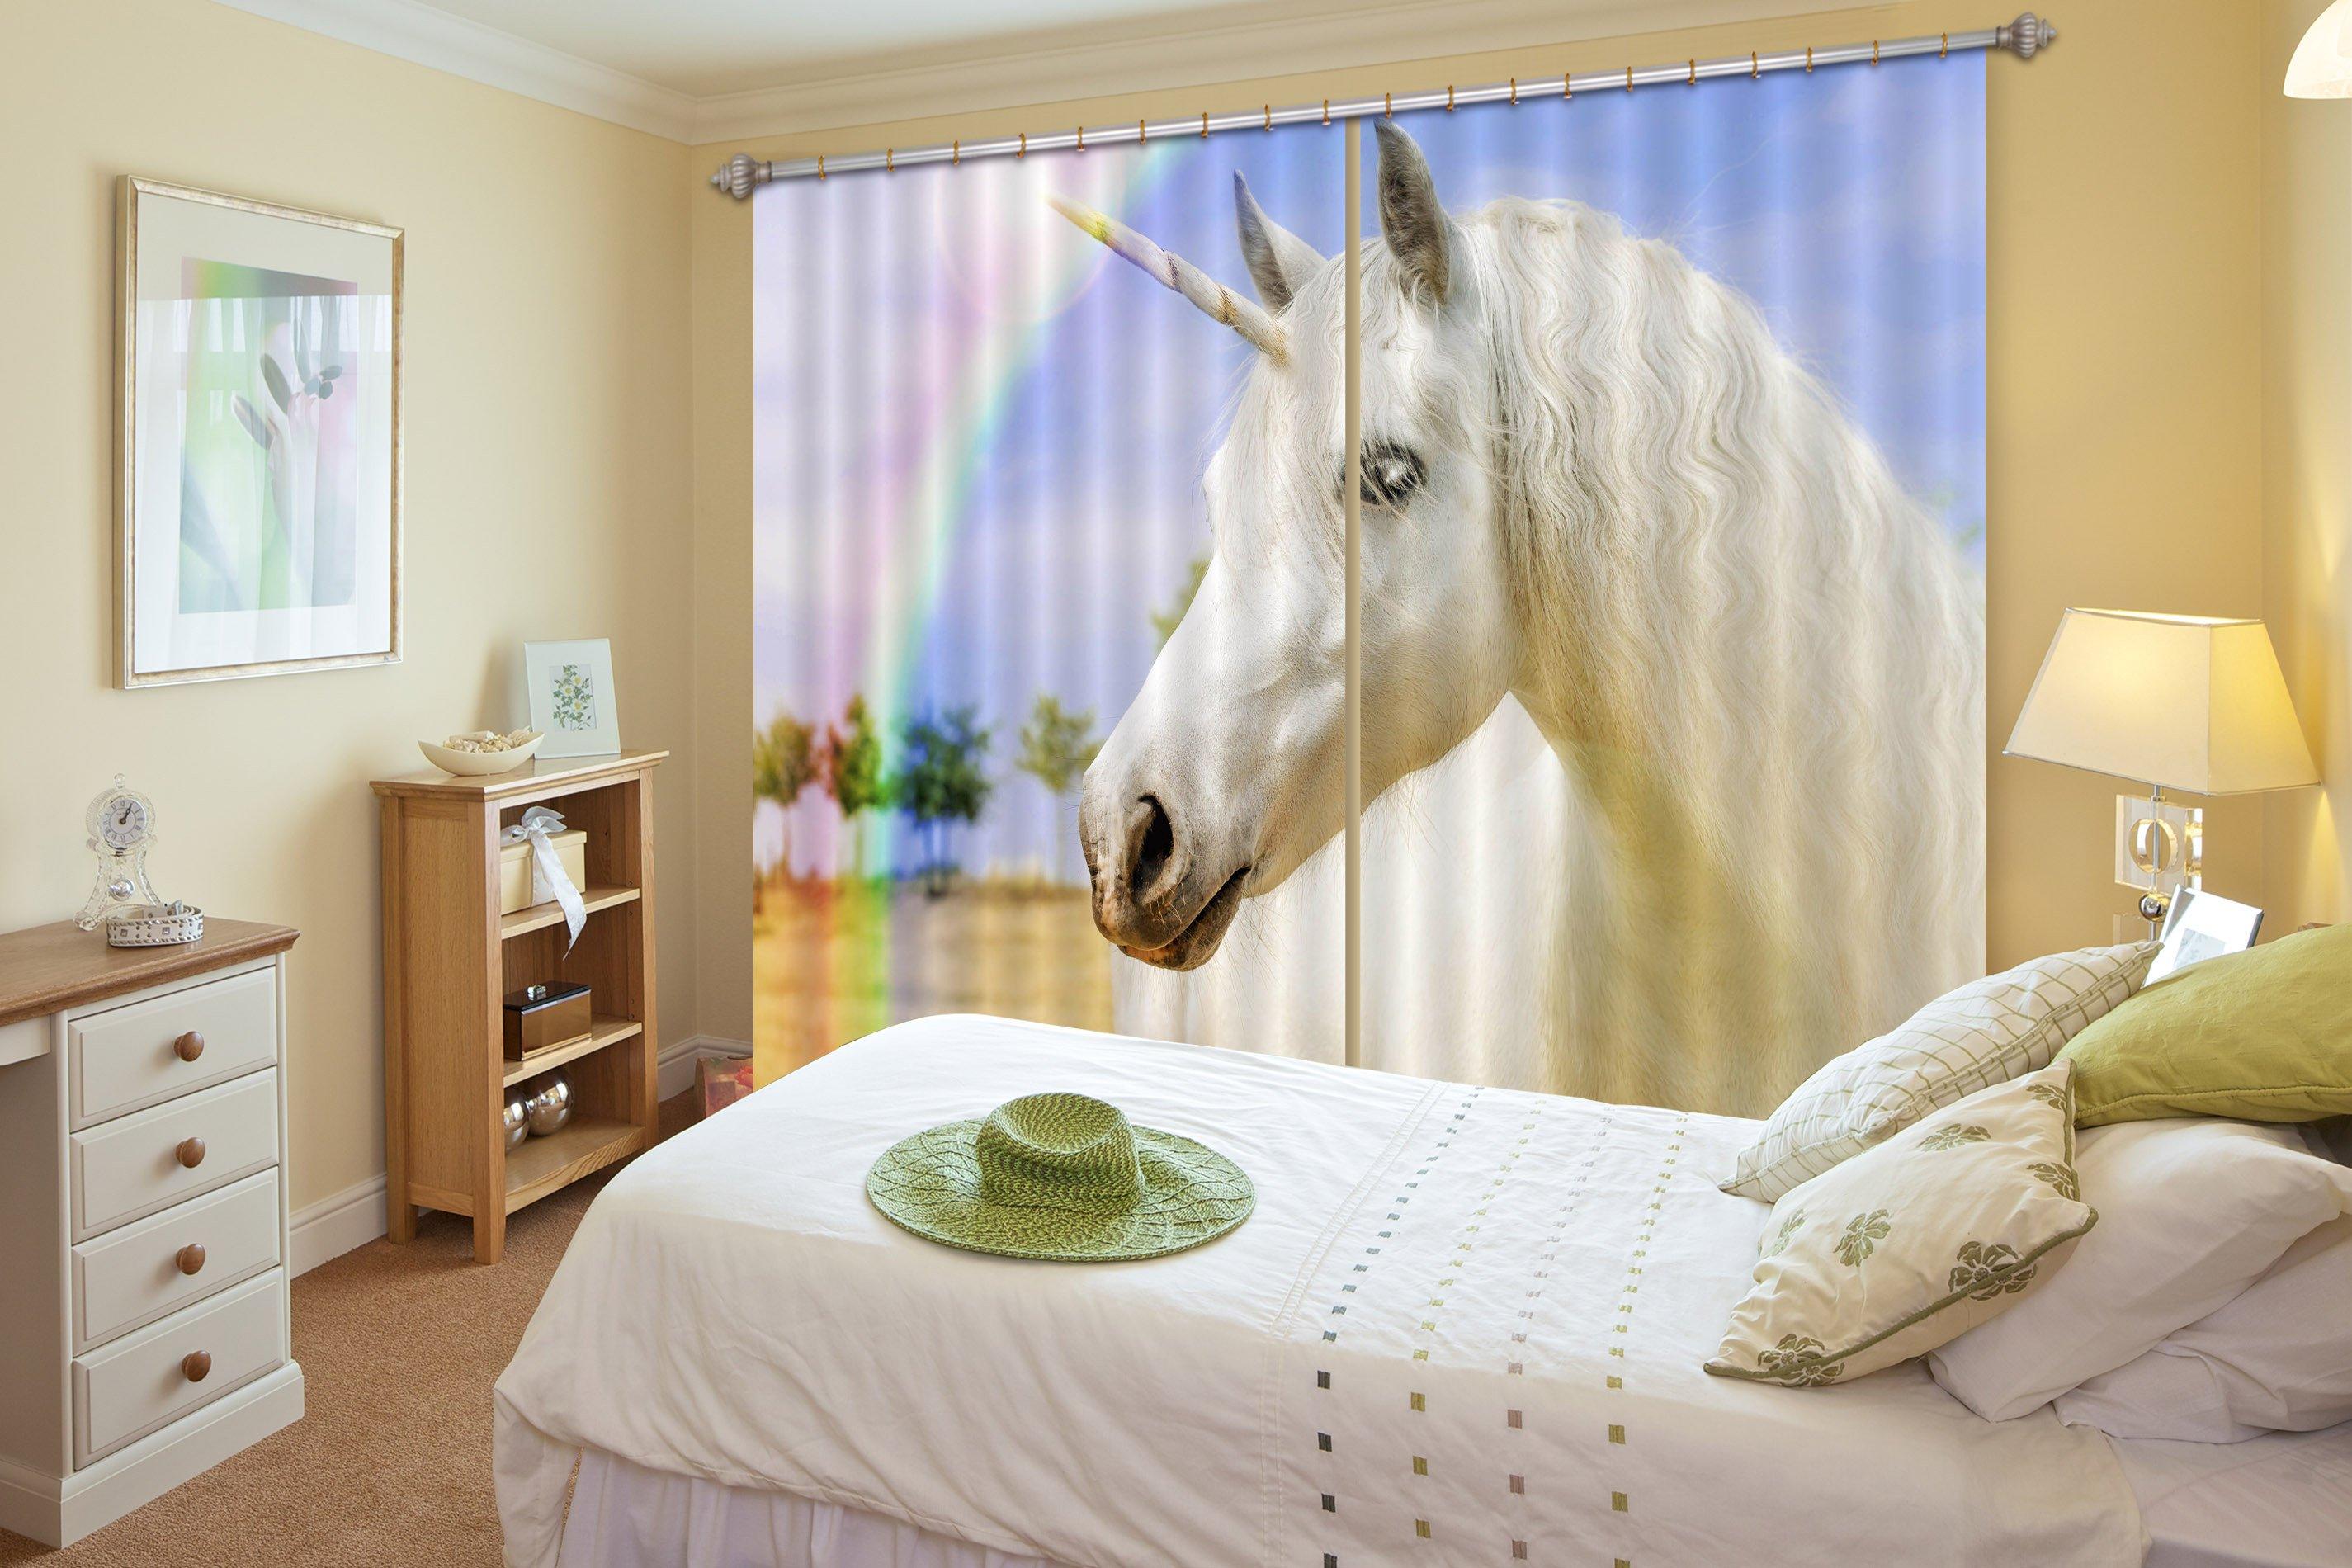 3D Rainbow Horse 52 Curtains Drapes Wallpaper AJ Wallpaper 